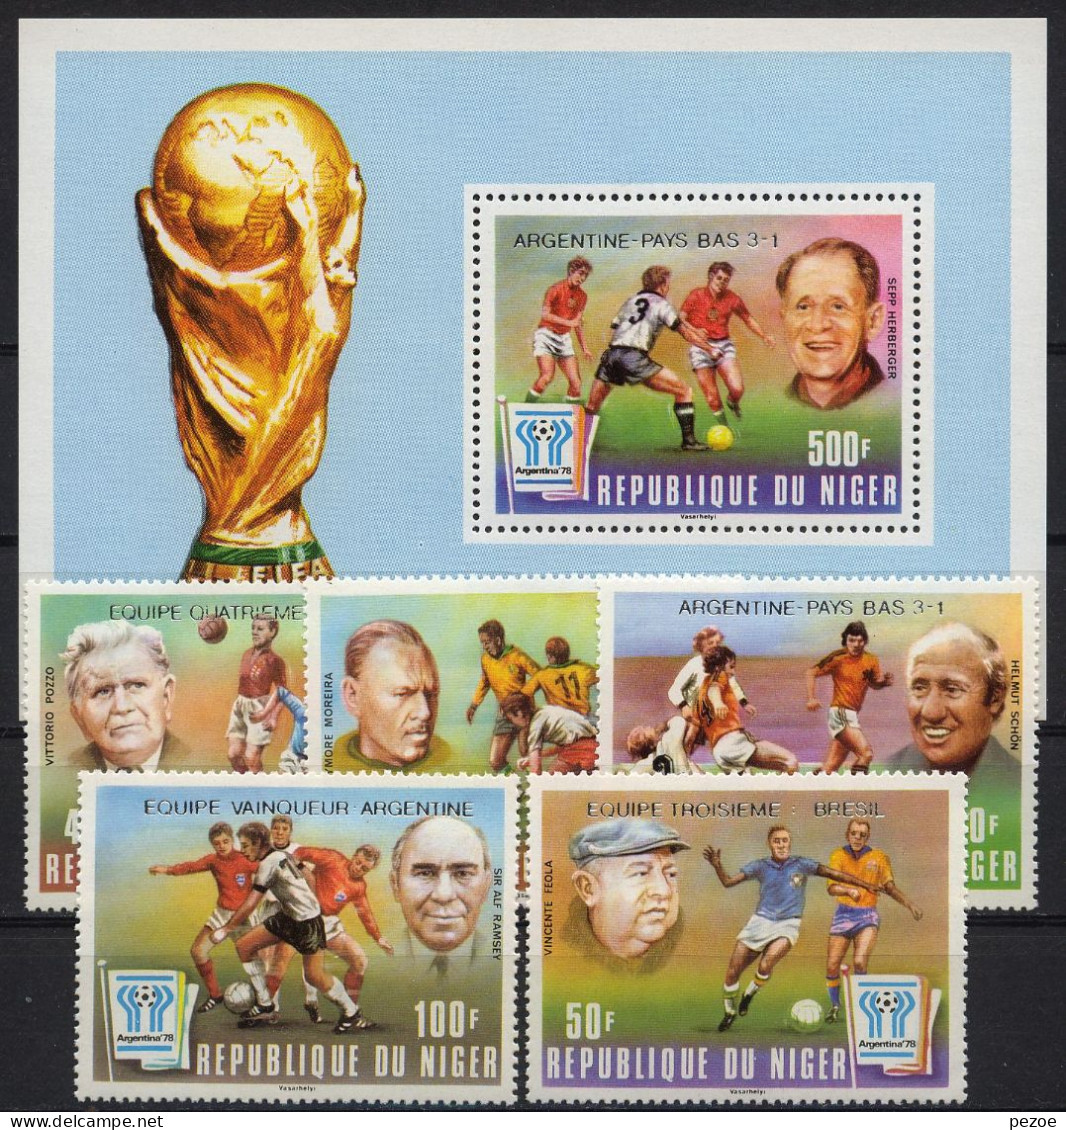 Football / Soccer / Fussball - WM 1978: Niger  5 W + Bl **, Silber Aufdruck - 1978 – Argentina